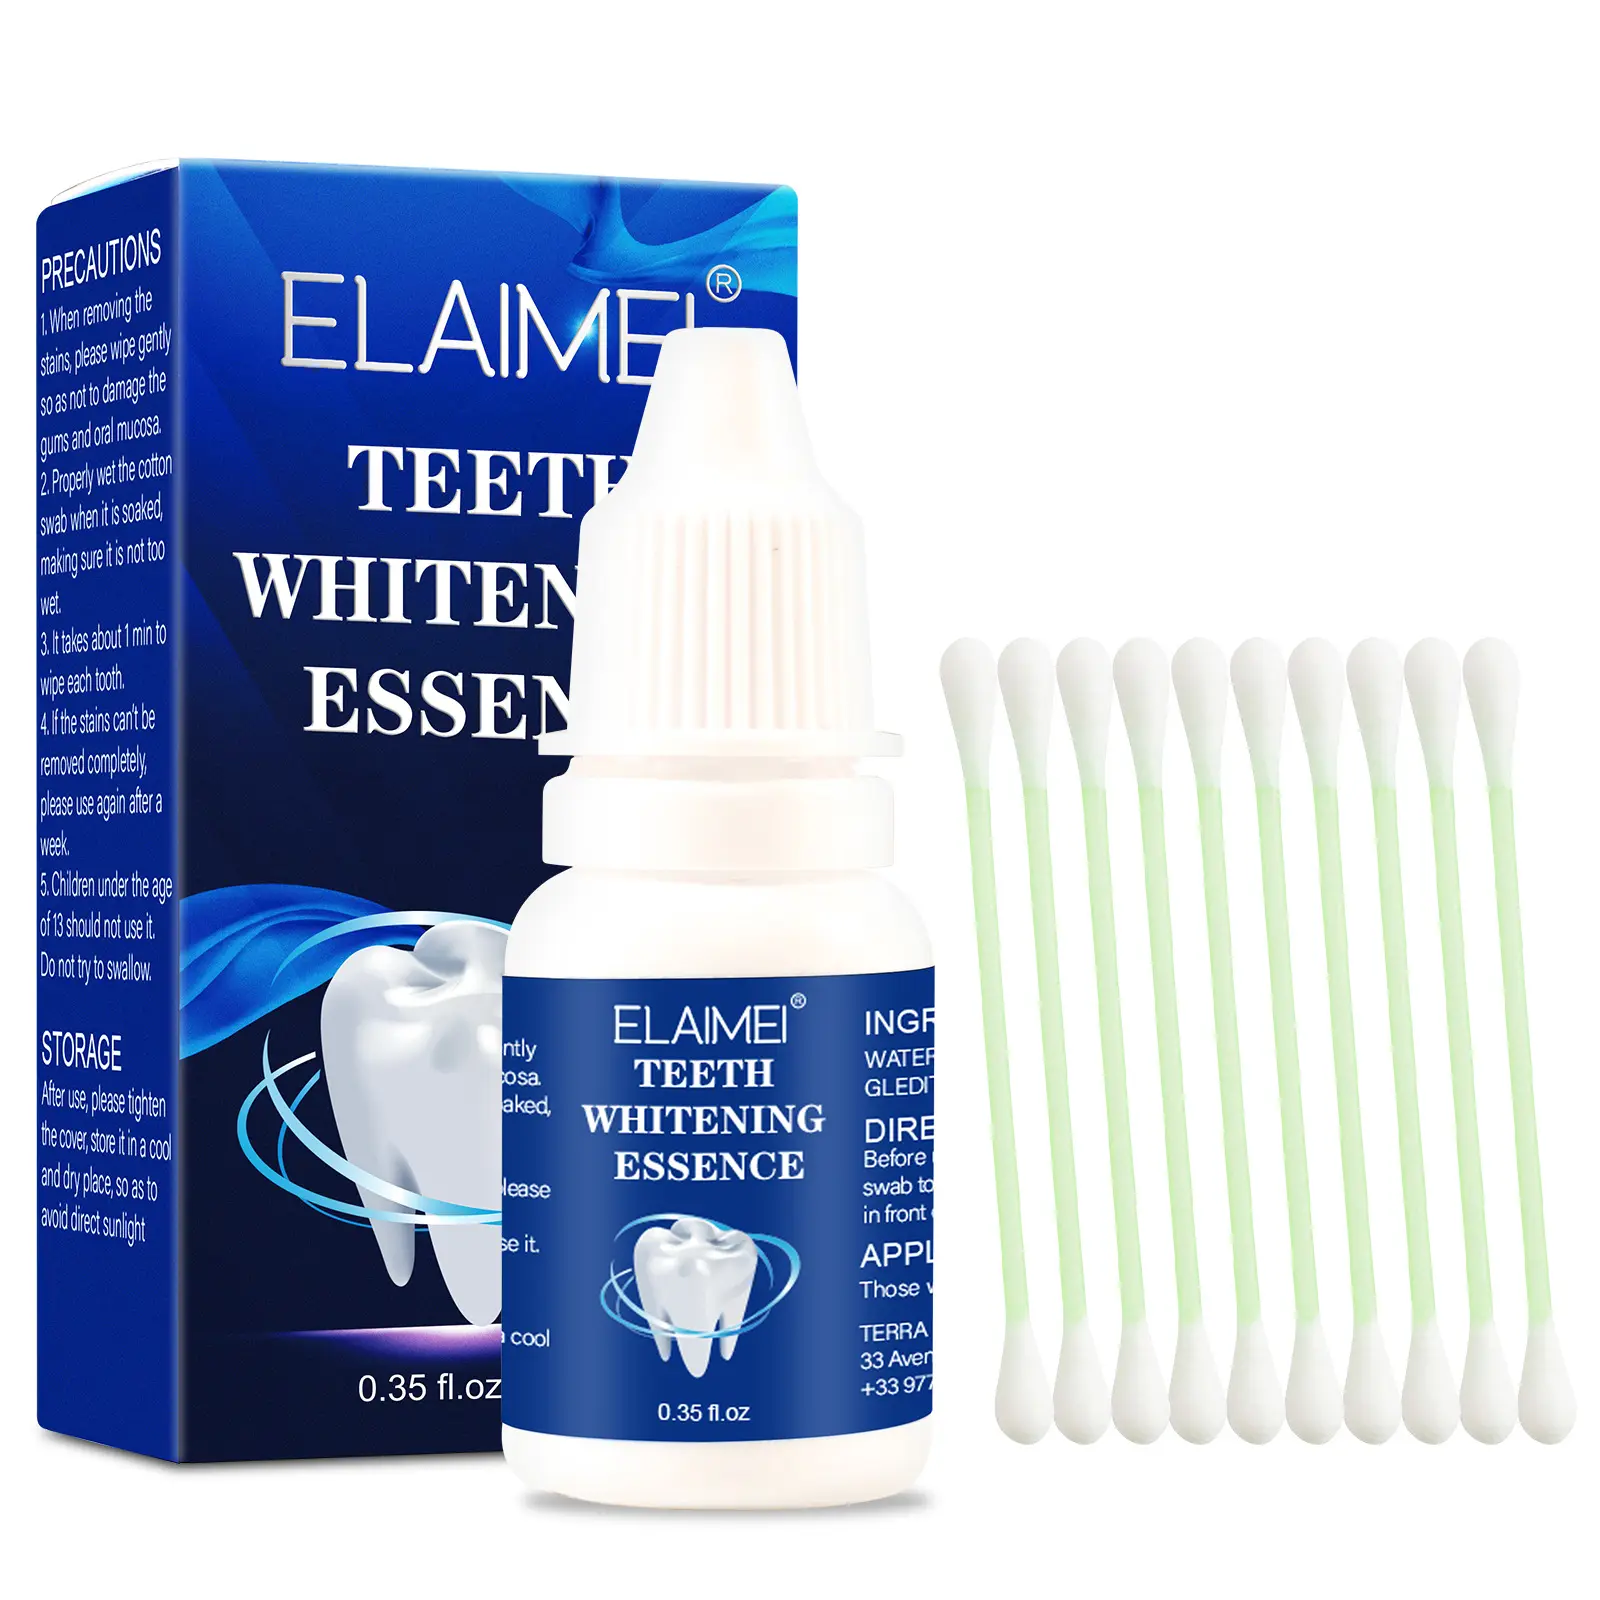 ELAIMEI Teeth Whitening Serum Clean Oral Hygiene Whiten Teeth Remove Plaque Stains Fresh Breath Oral Hygiene Whitening Products